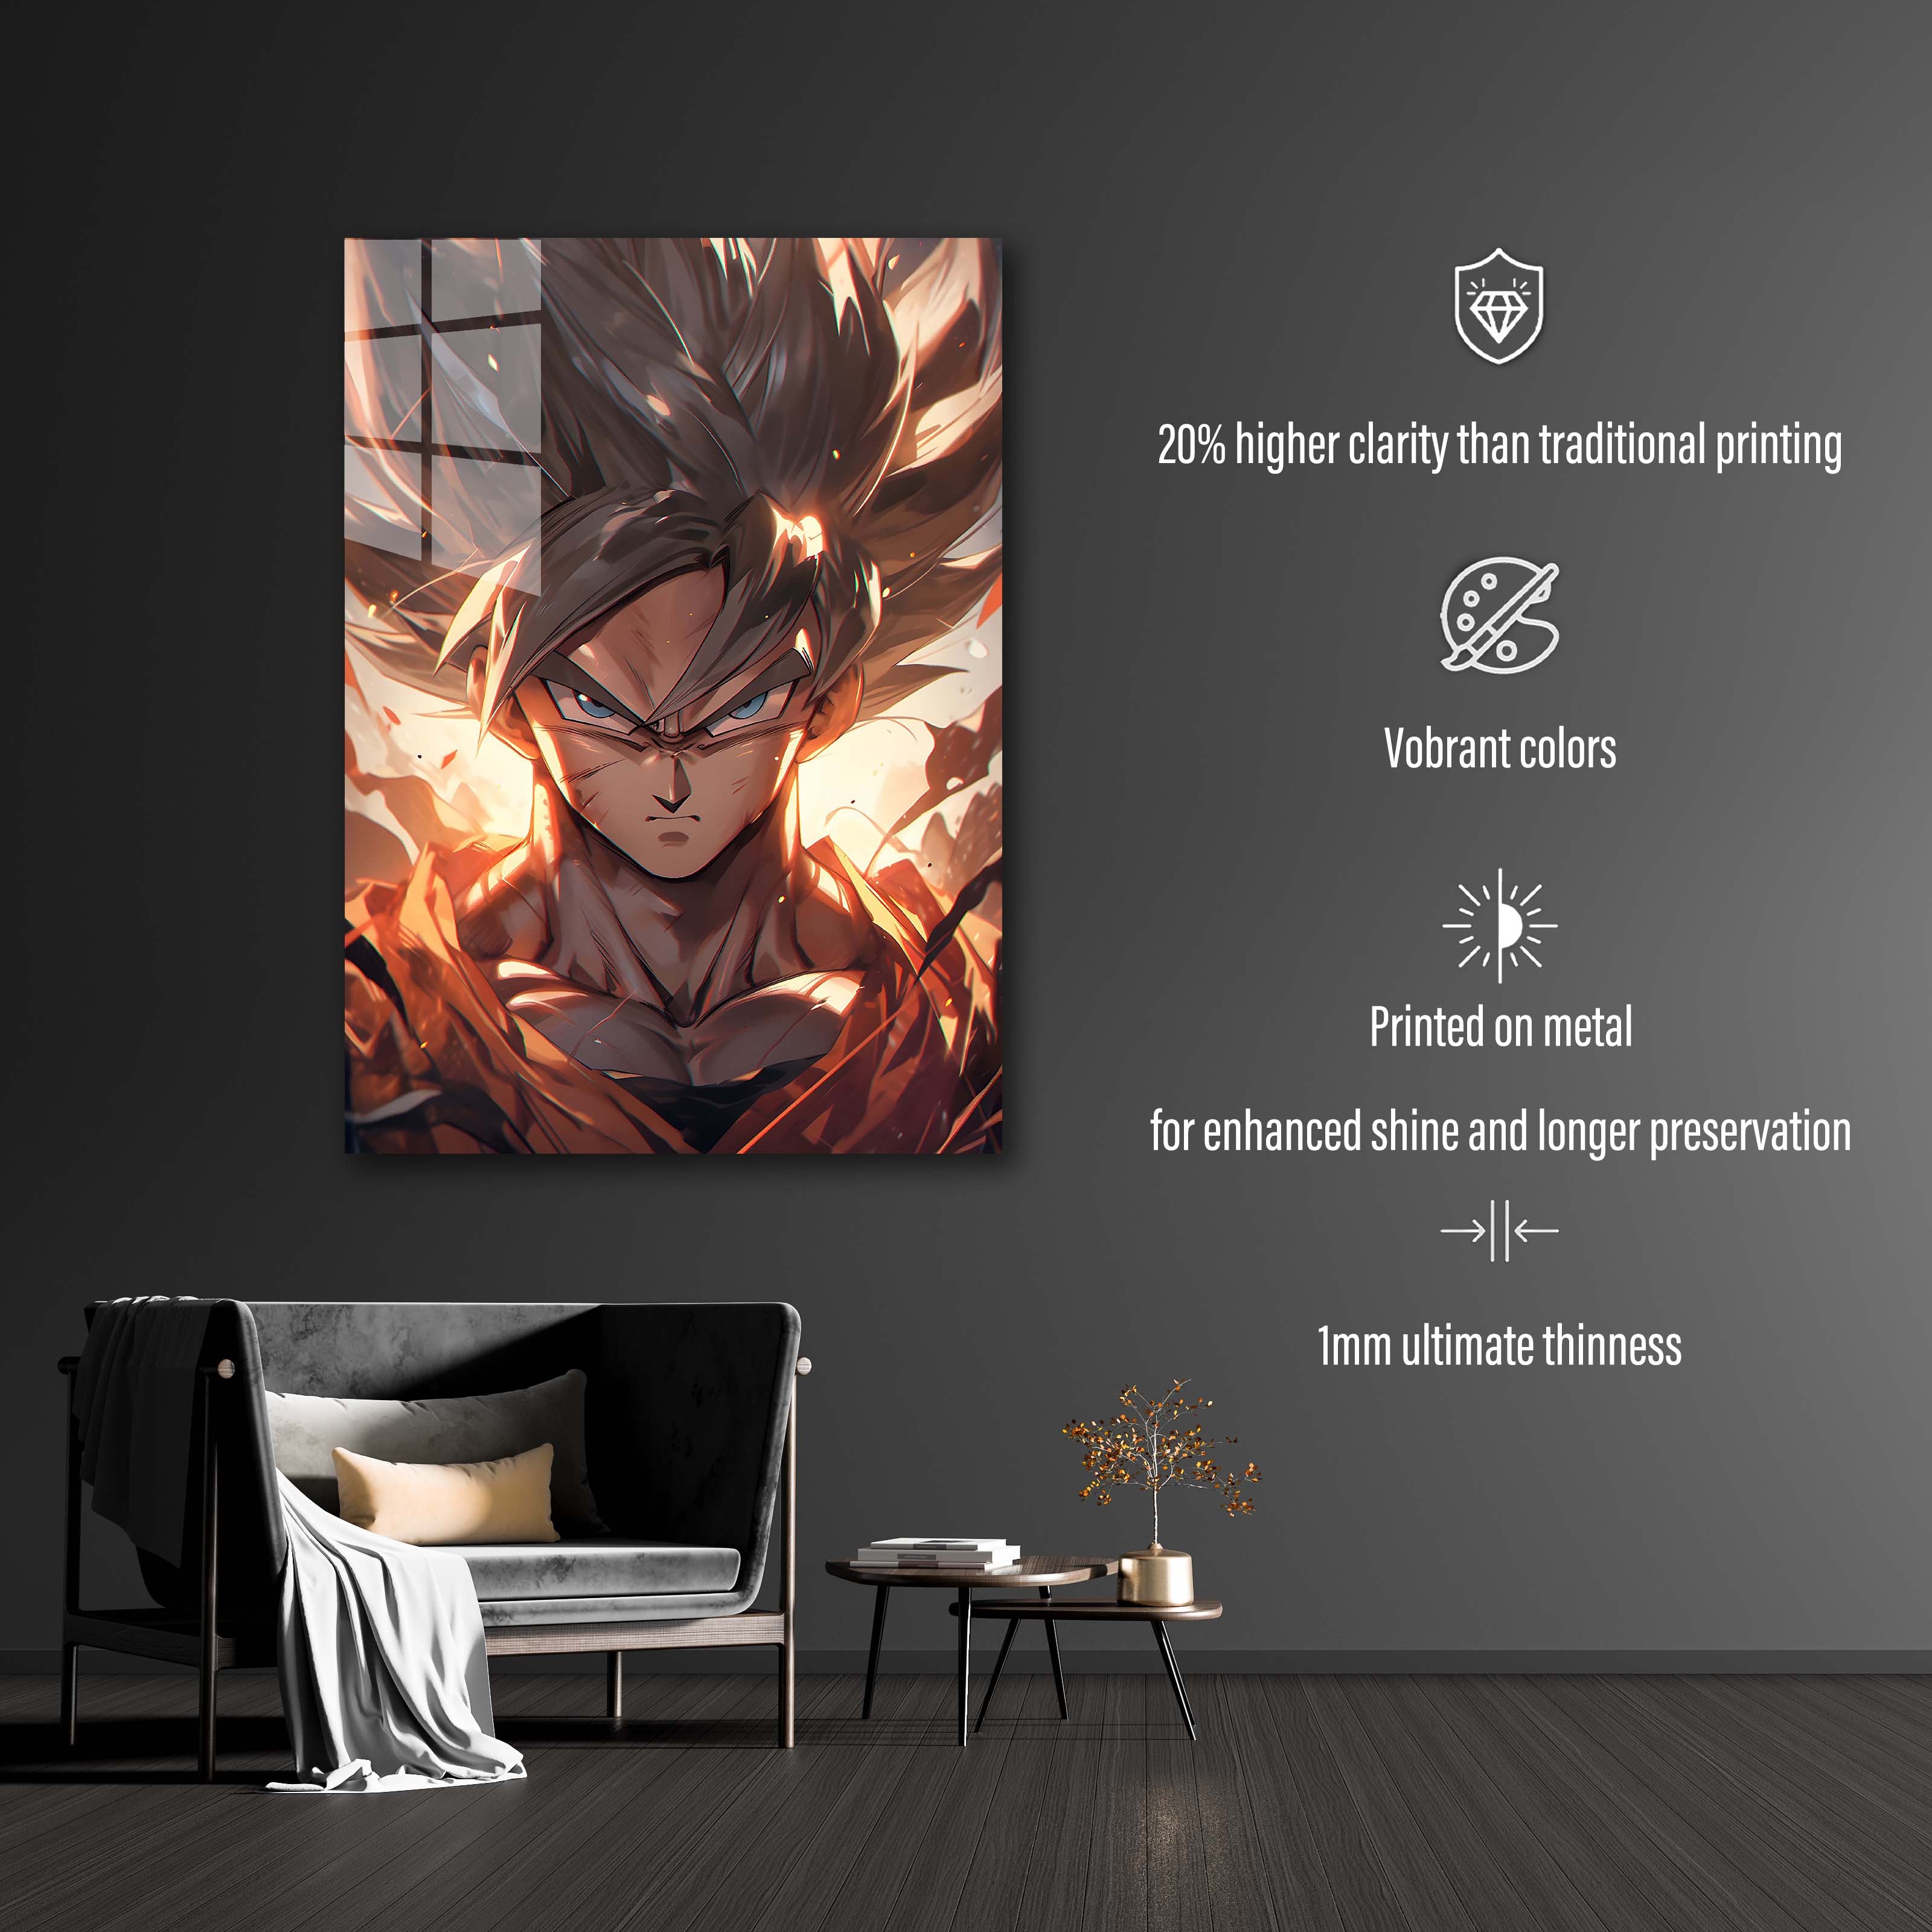 Super Saiyan Goku-designed by @Artfinity